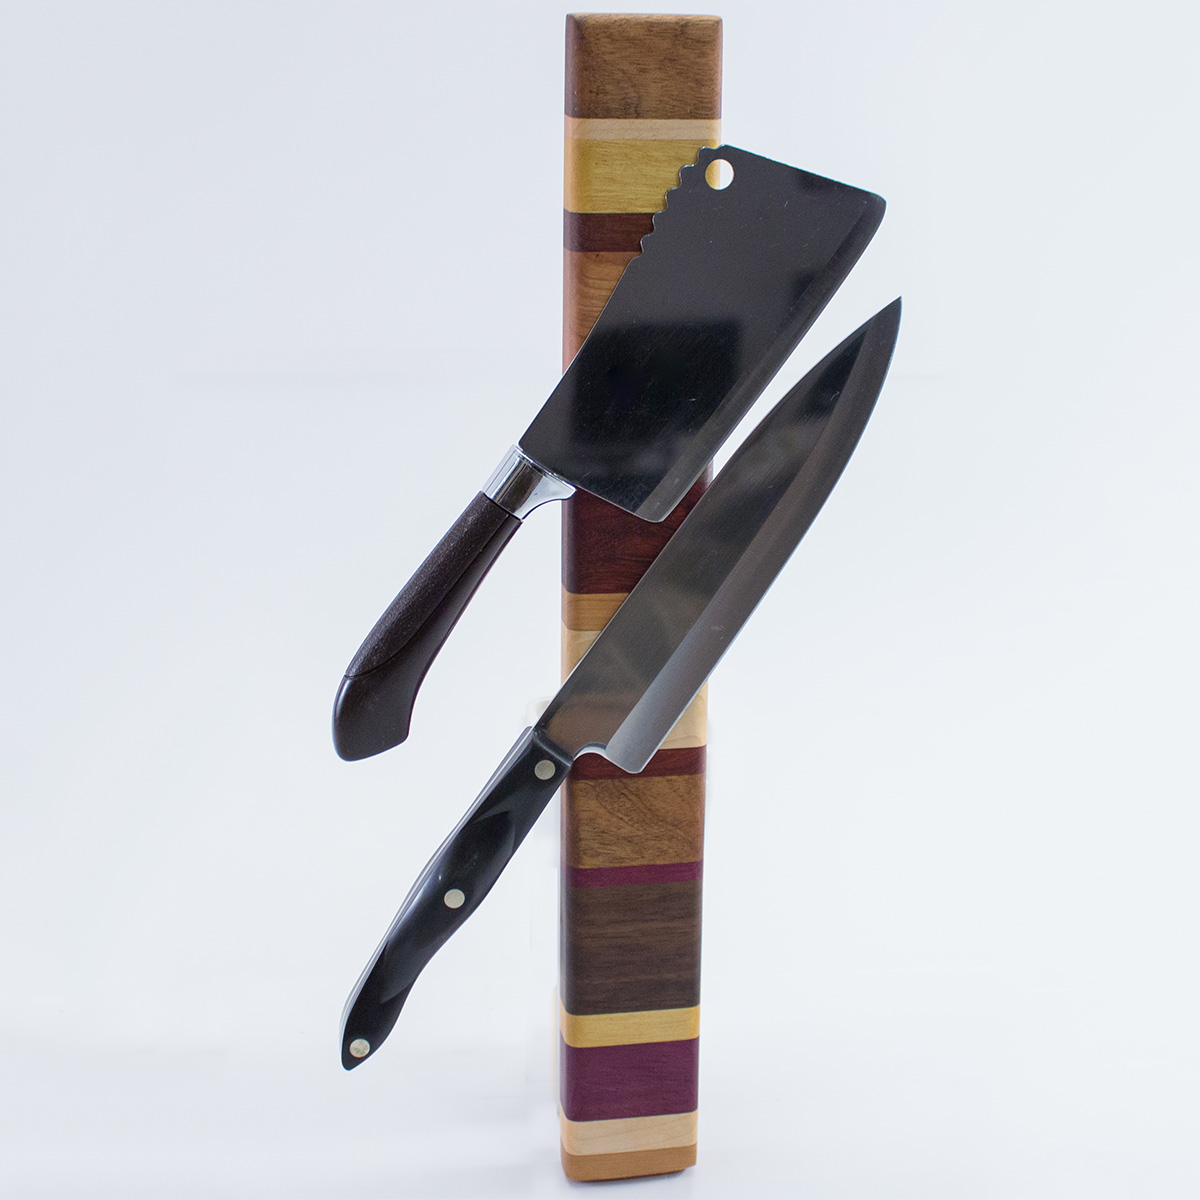 Knife Holder Backsplash by Hafele – Advance Design & Technologies Inc